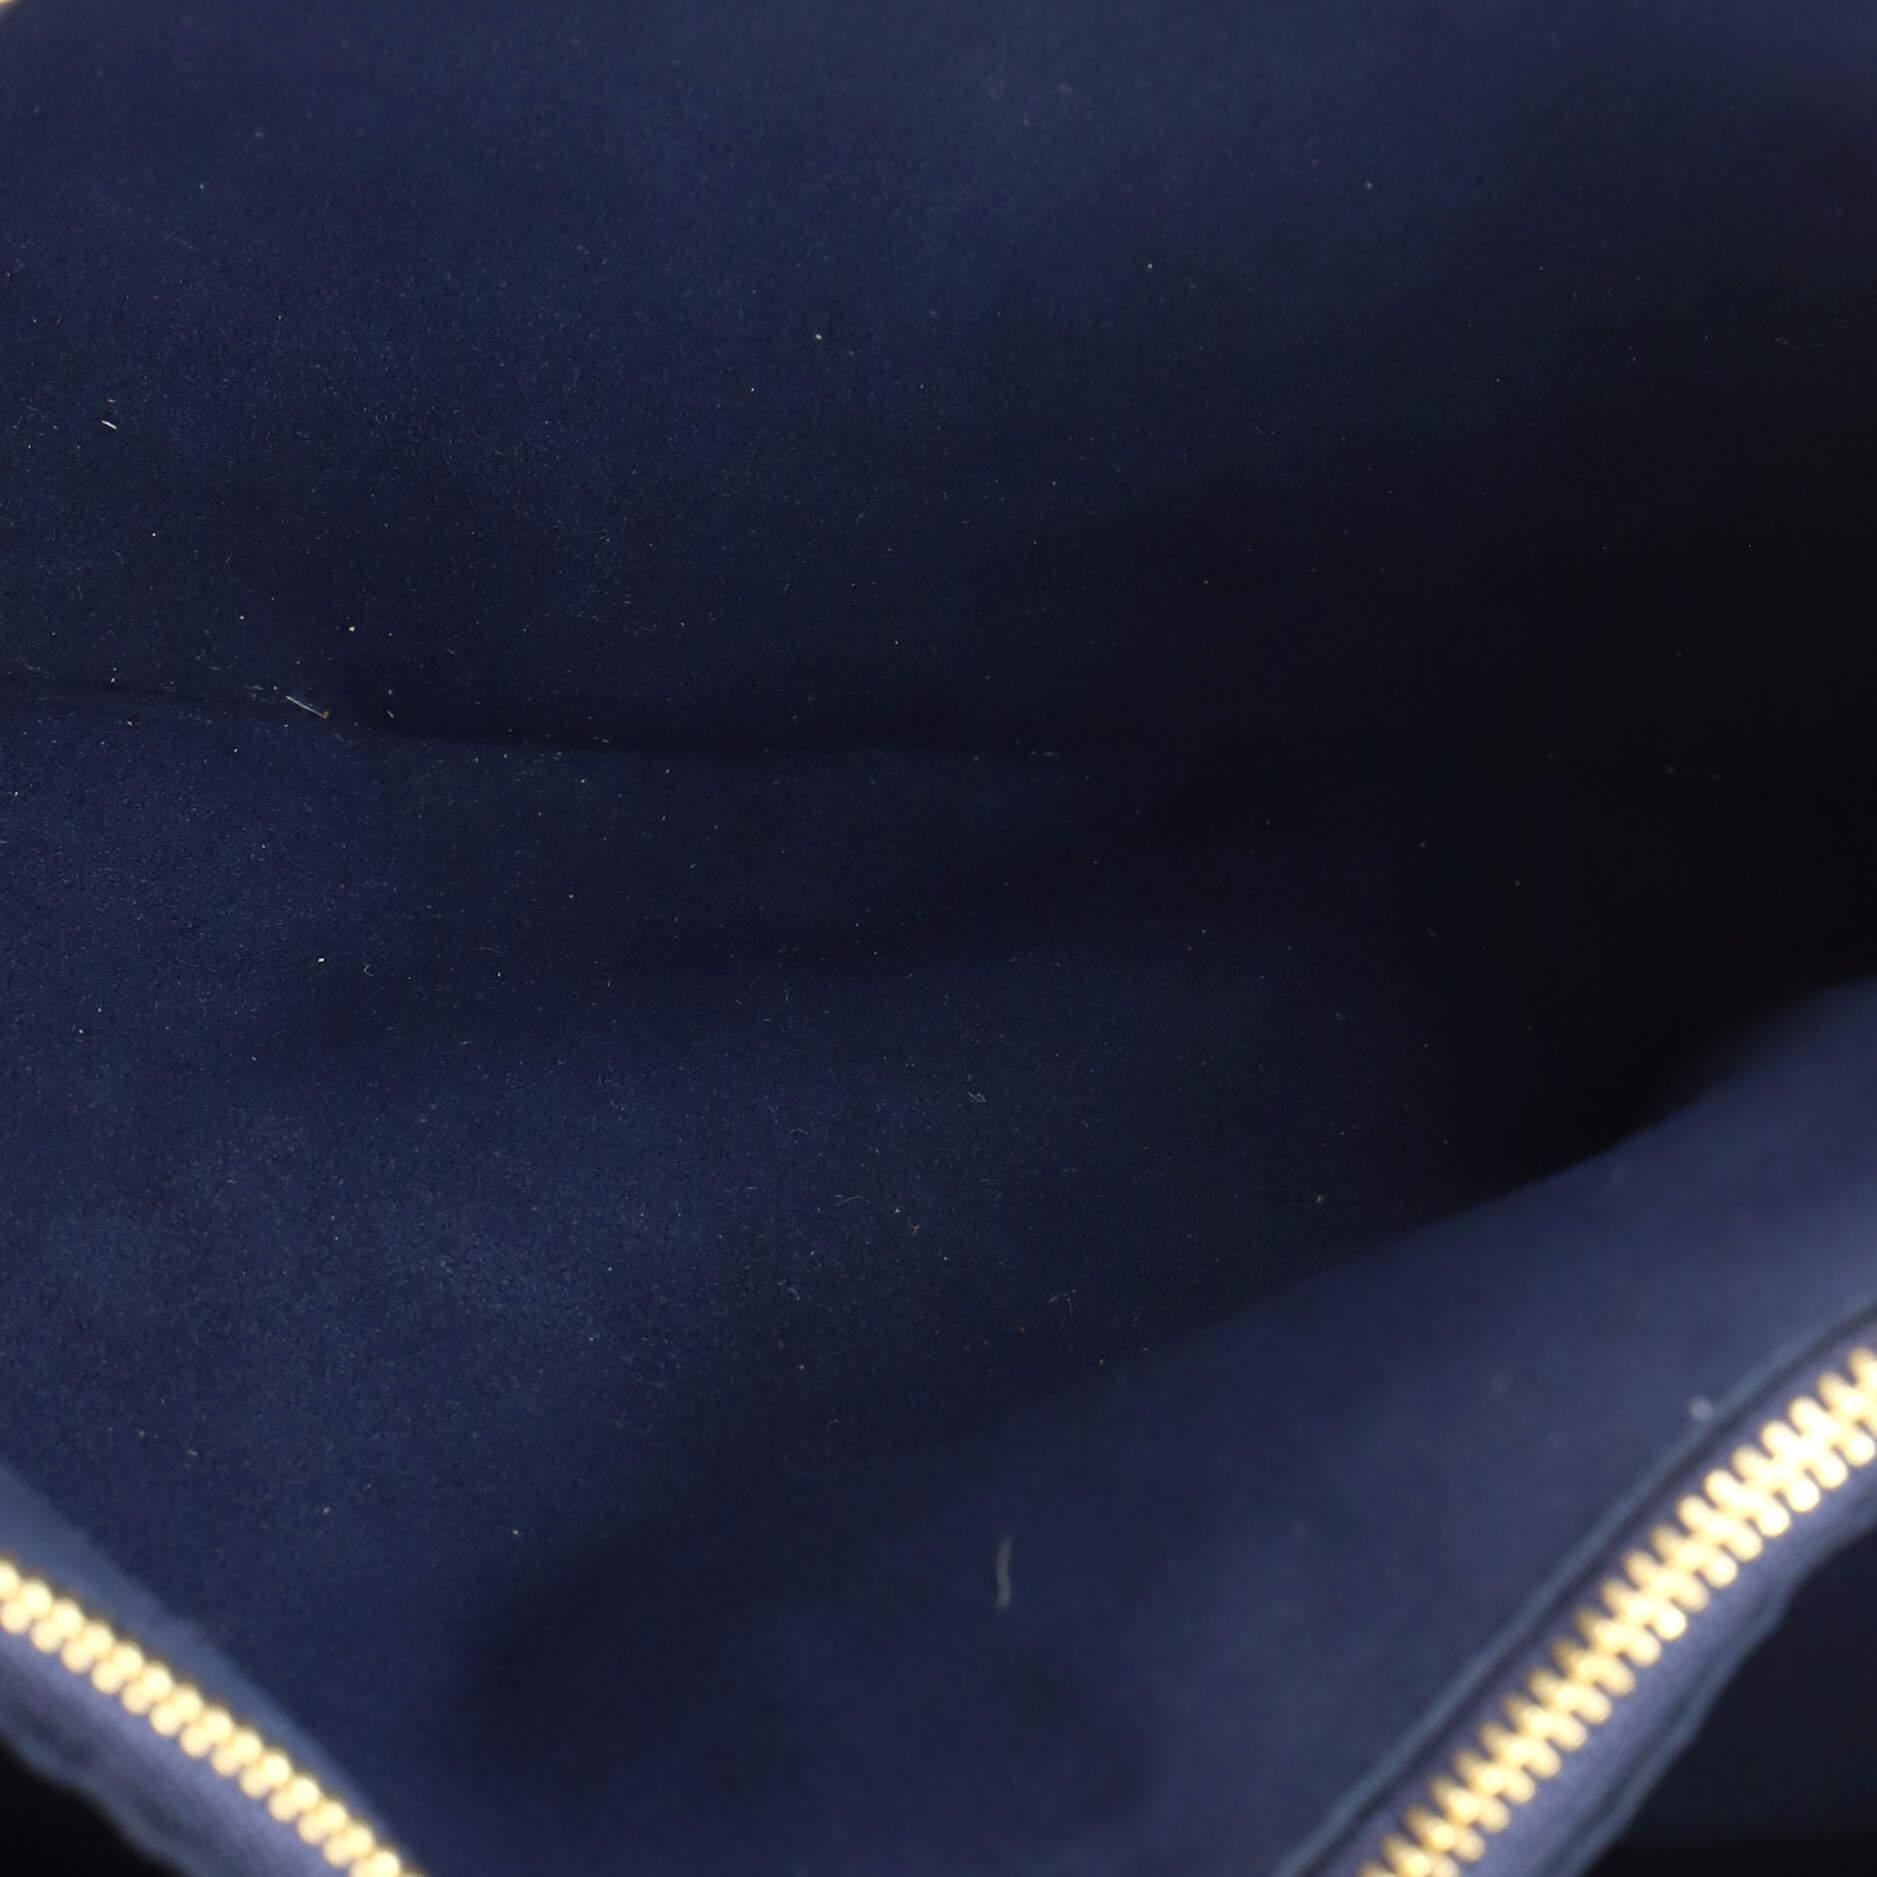 Women's or Men's Louis Vuitton Coussin Bag Monogram Embossed Lambskin PM